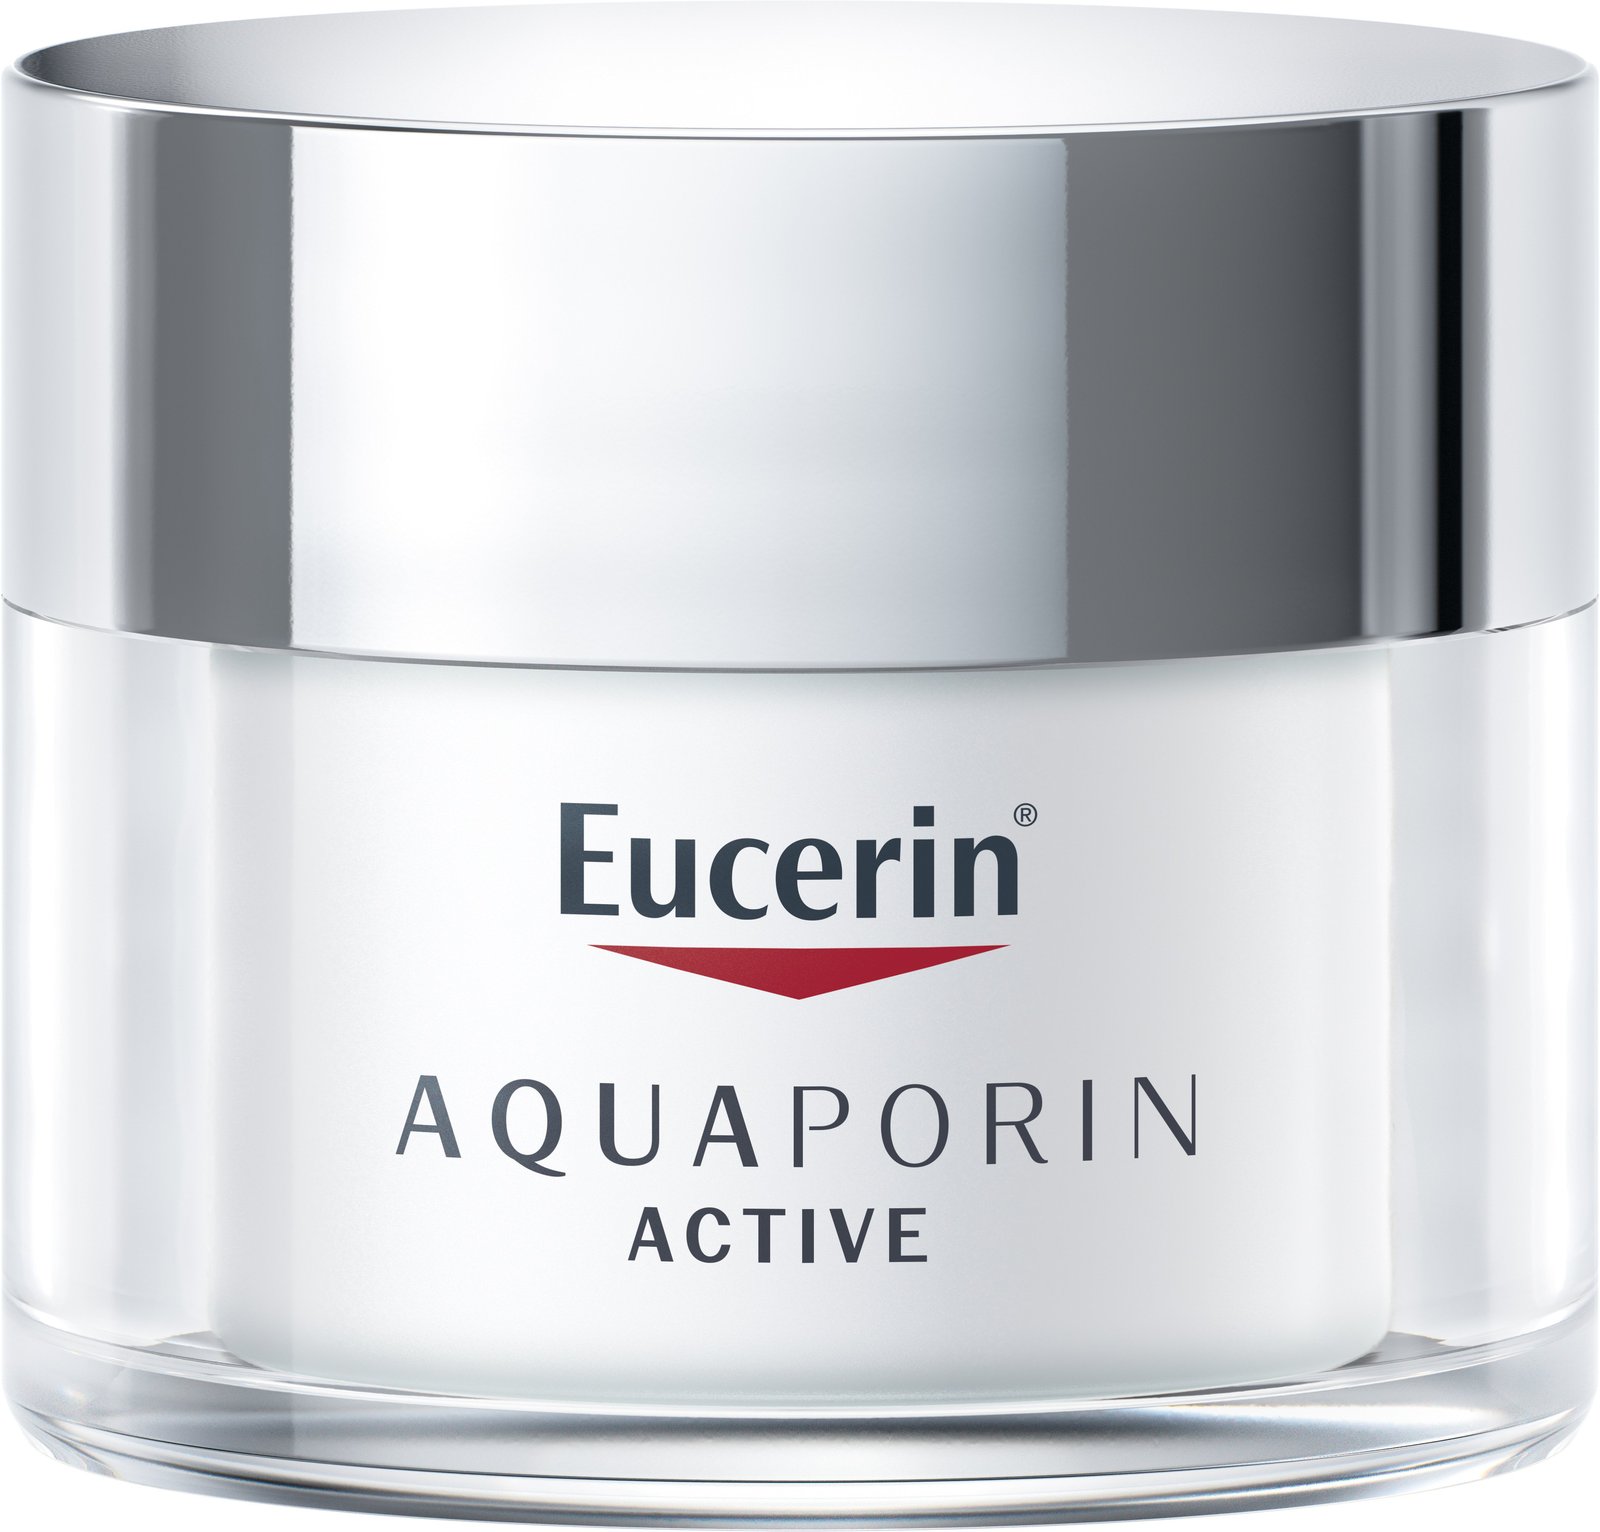 Eucerin AquaPorin Active SPF25 50 ml